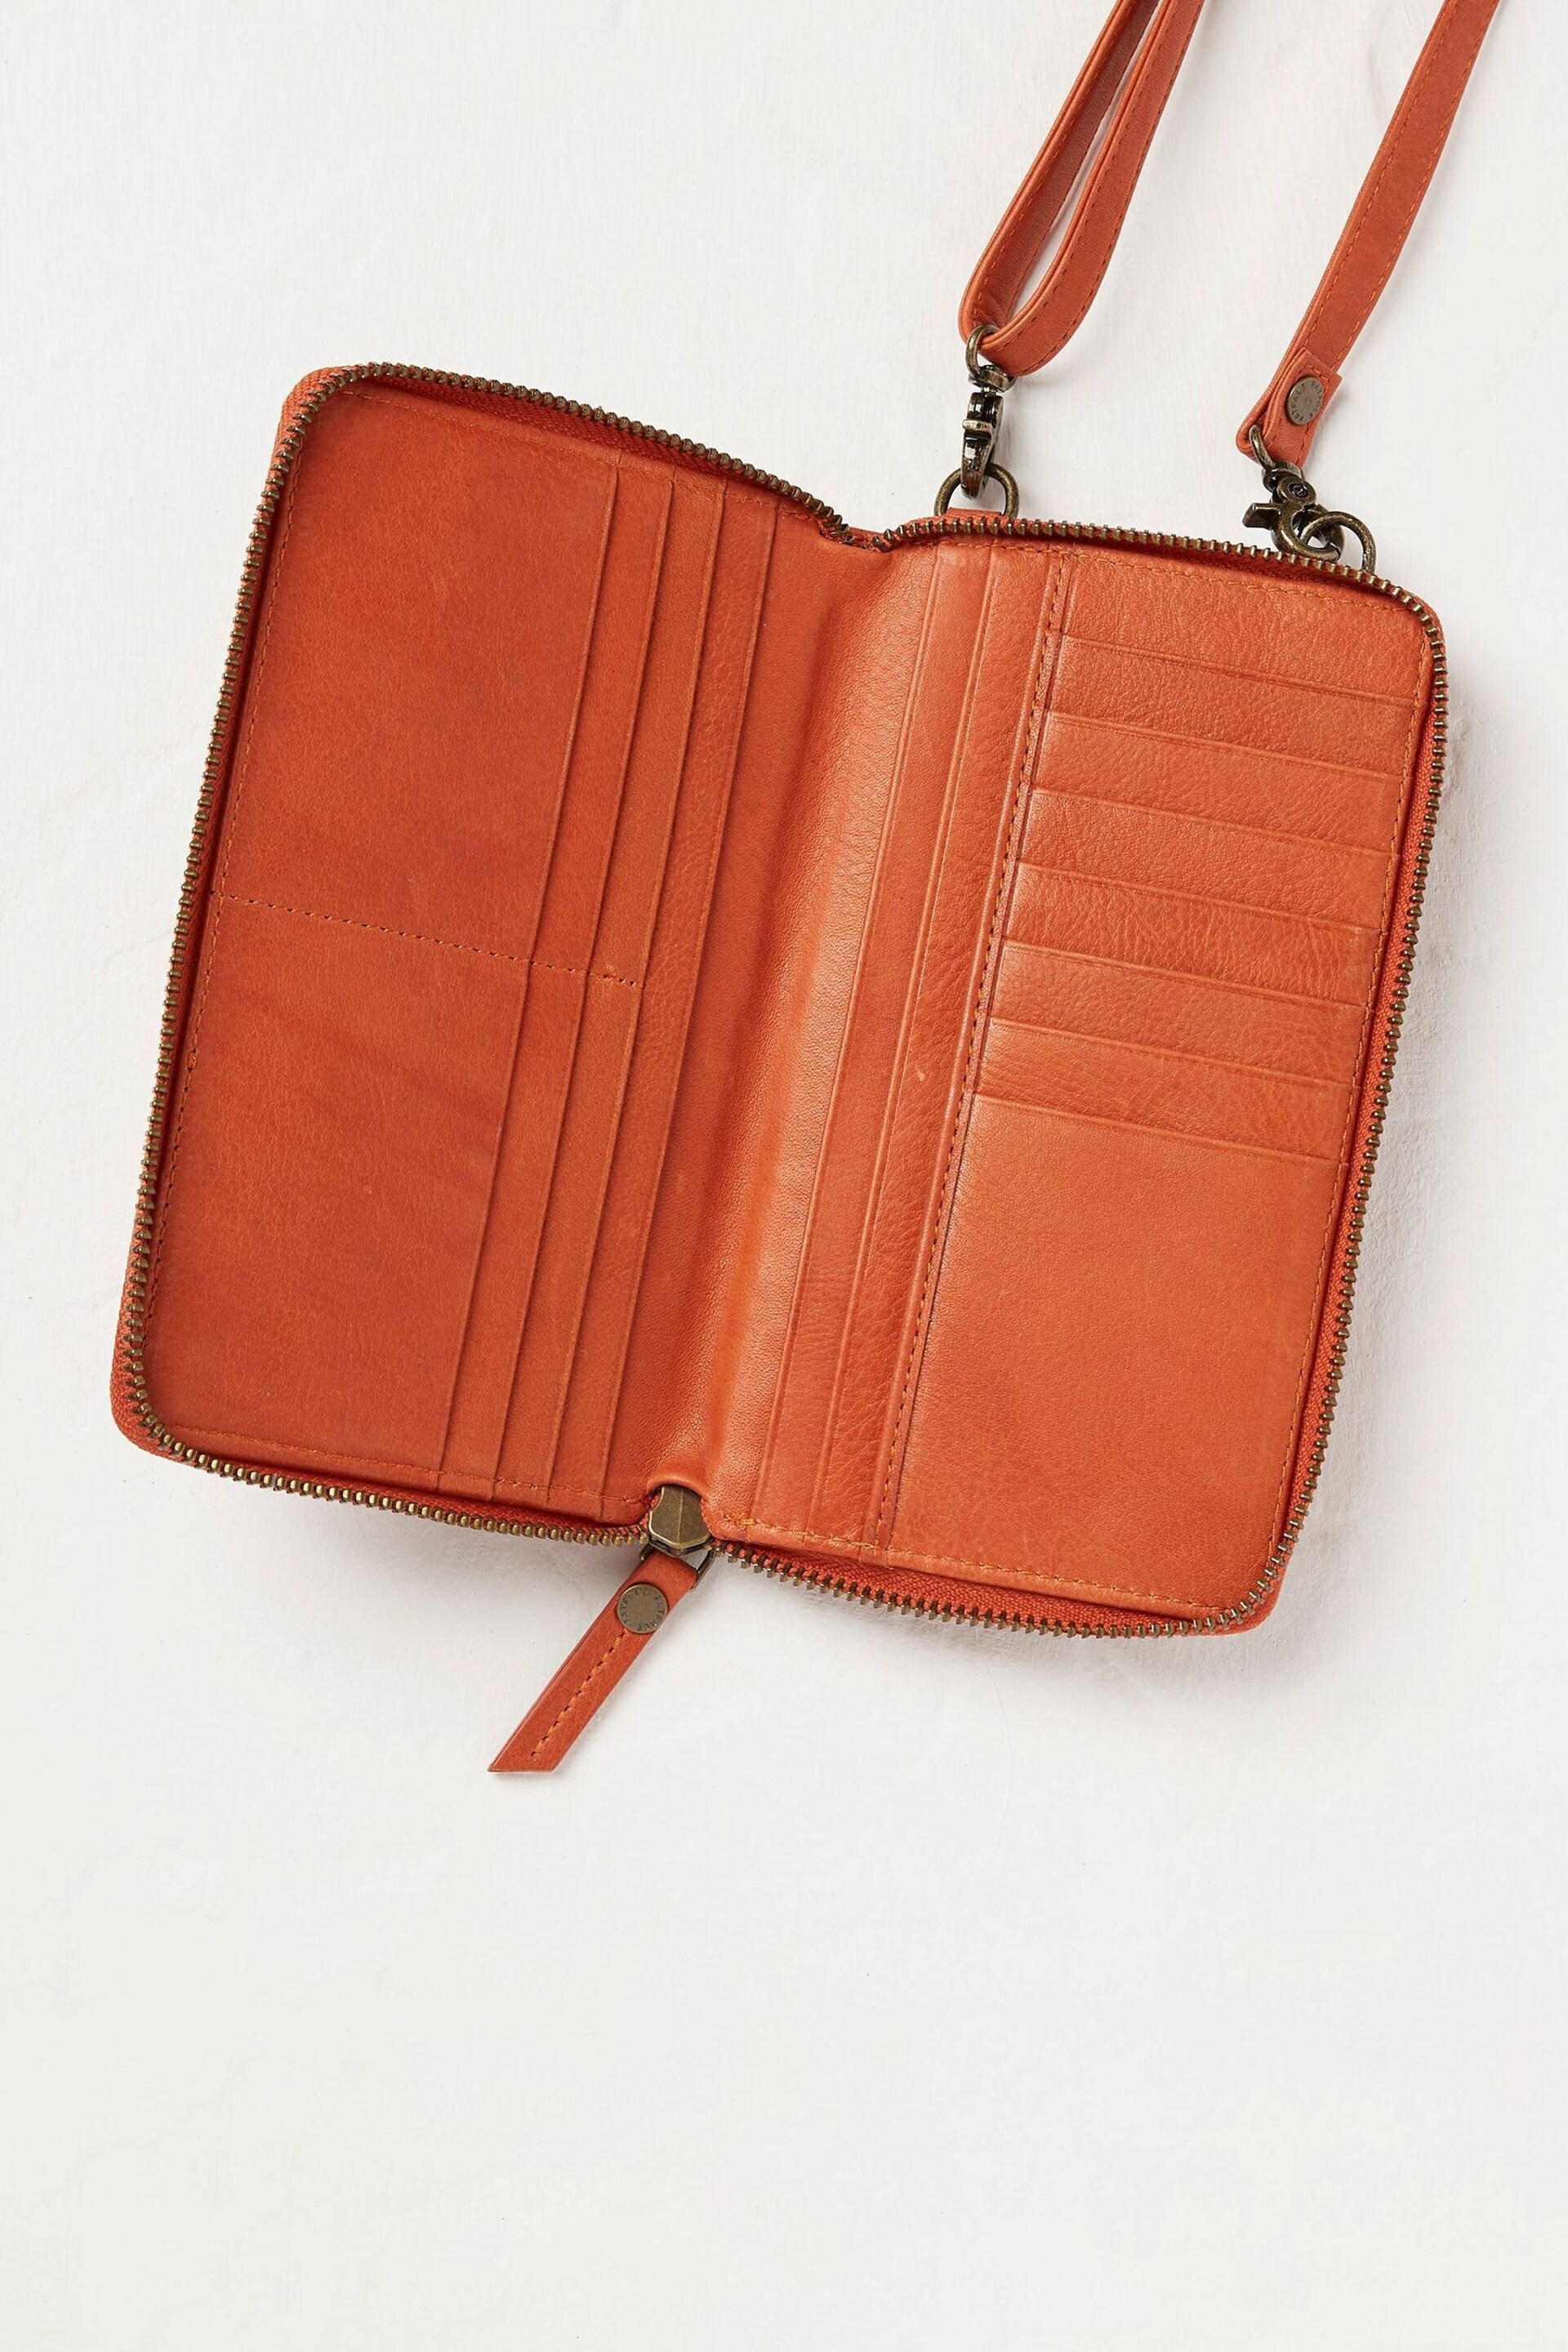 FatFace Orange Louisa Purse Phone Bag - Image 4 of 4